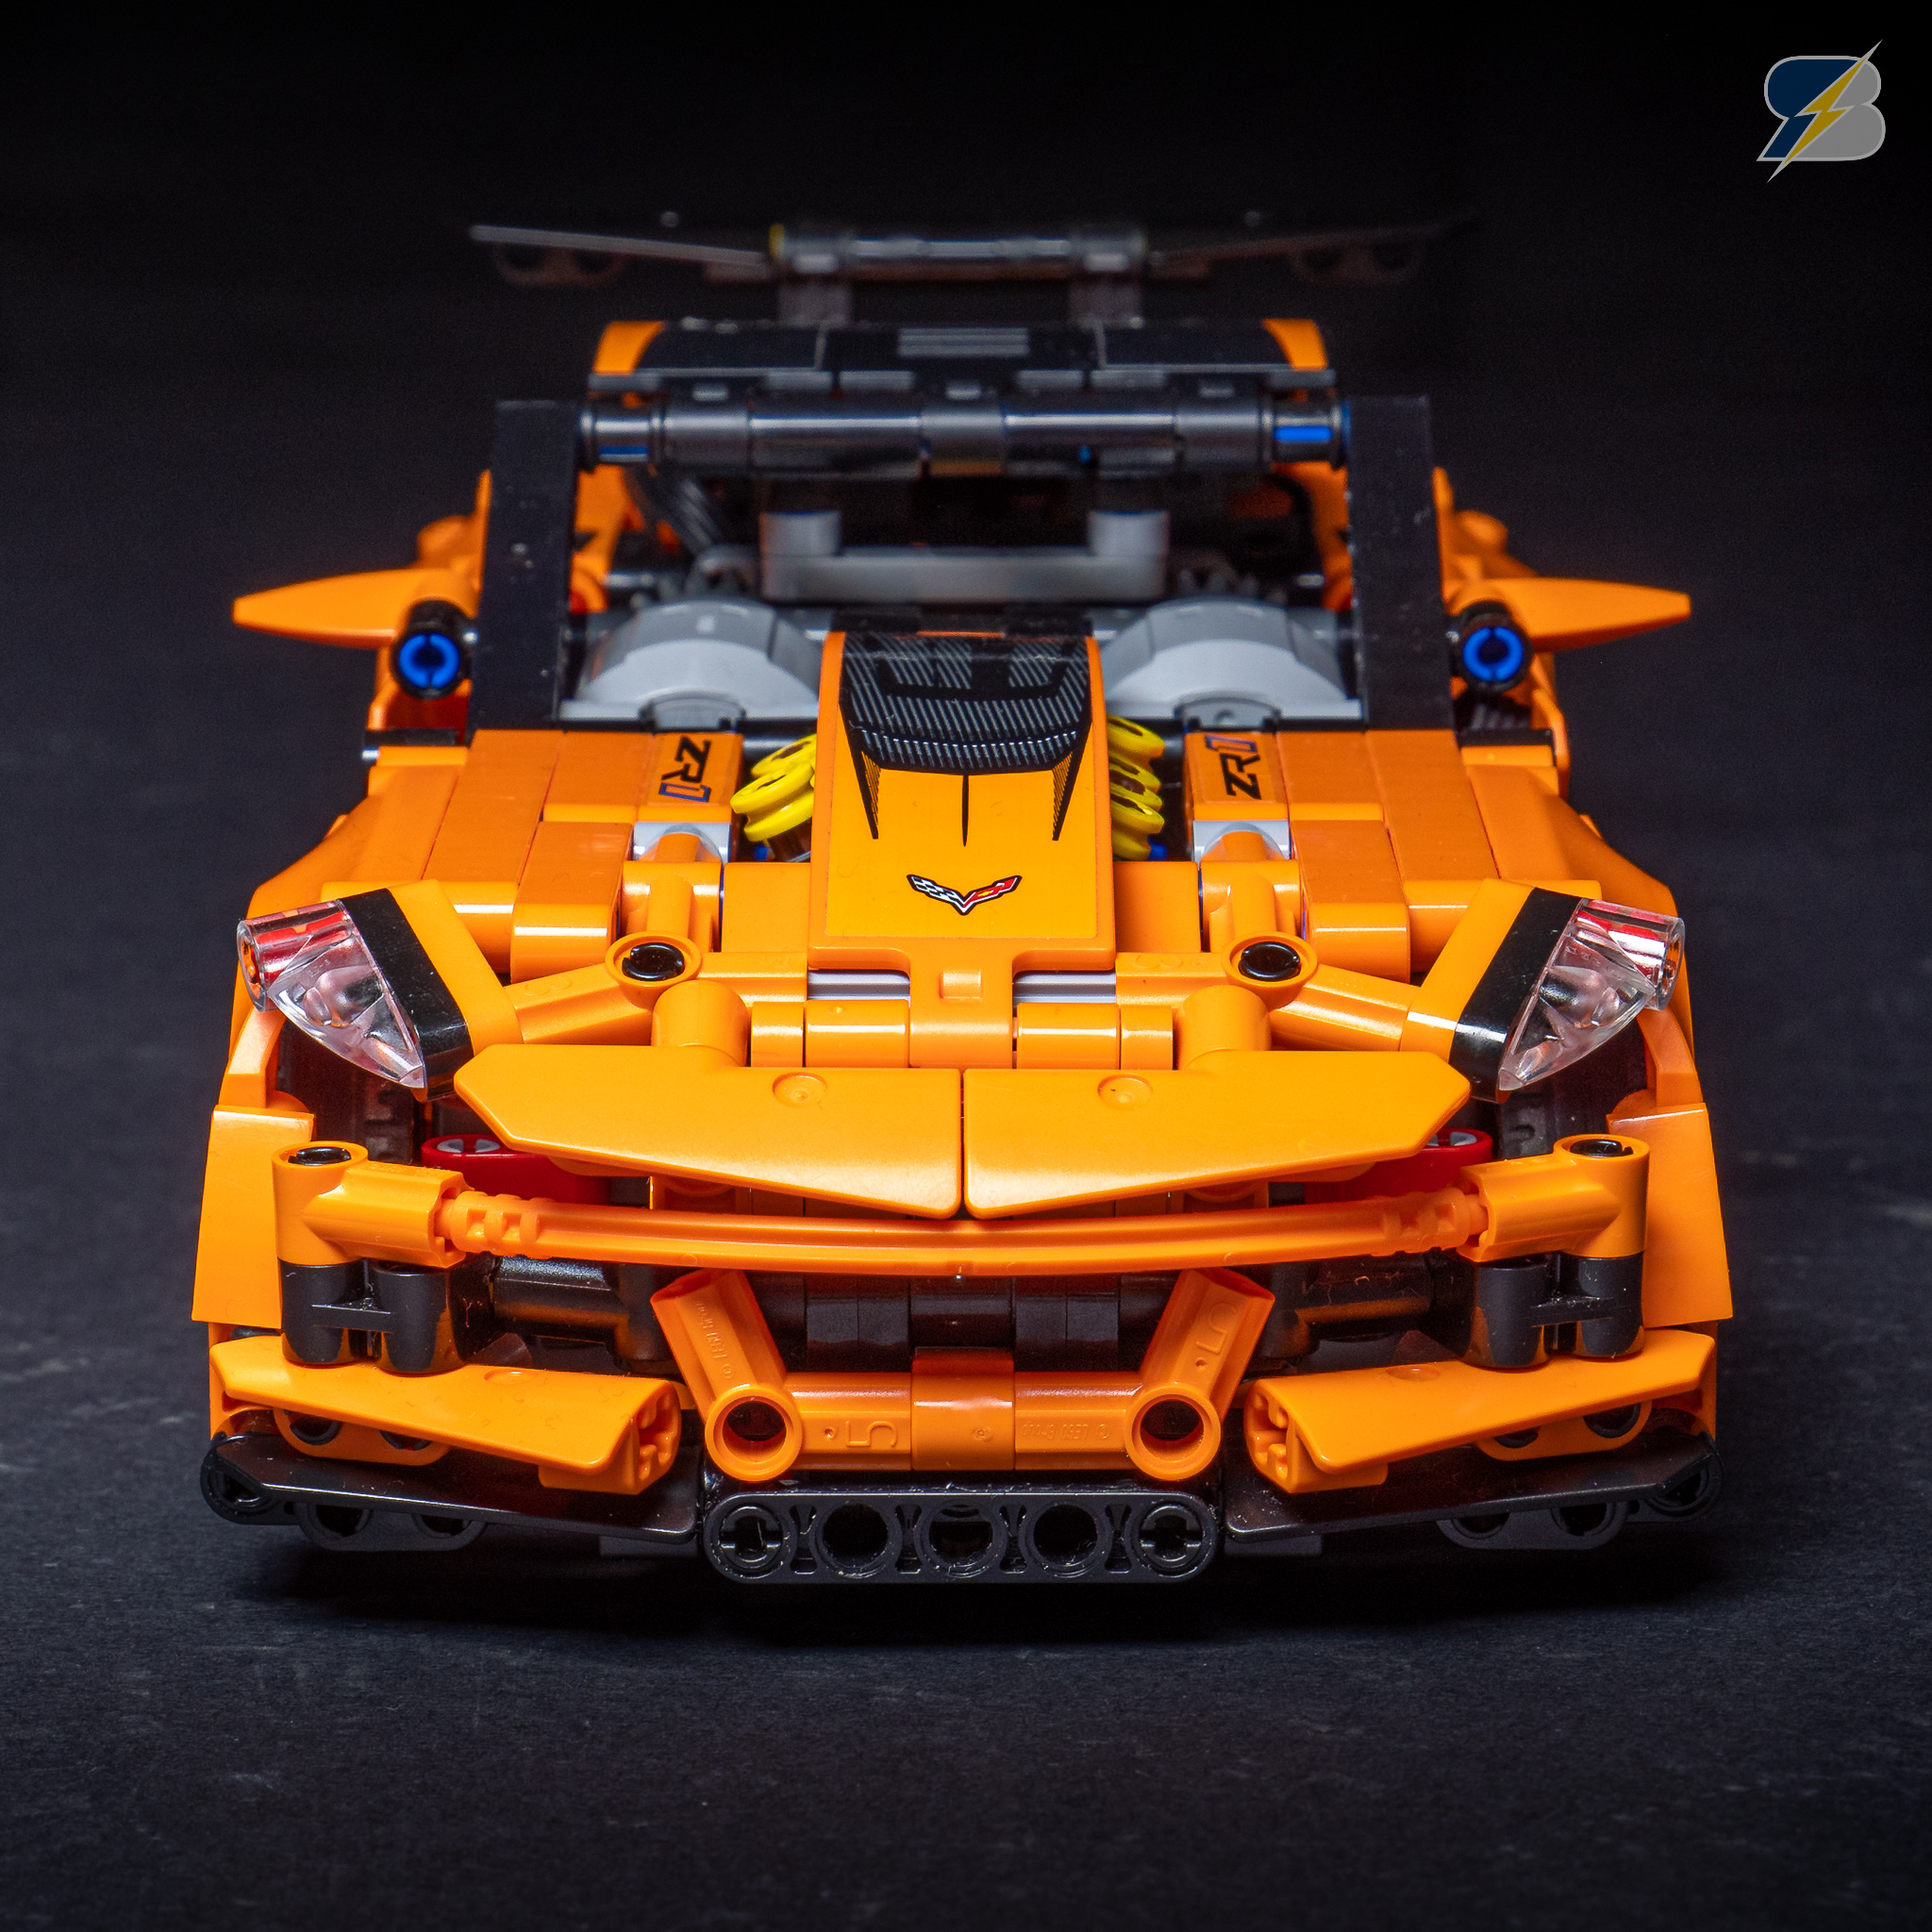 RacingBrick on "LEGO Technic 42093 Chevrolet Corvette ZR1 redesigned &amp; motorized. Details, video &amp; instructions here - https://t.co/ZTL8H1LgTx #lego #legotechnic #corvette #remotecontrol #buwizz #legorc https://t.co ...